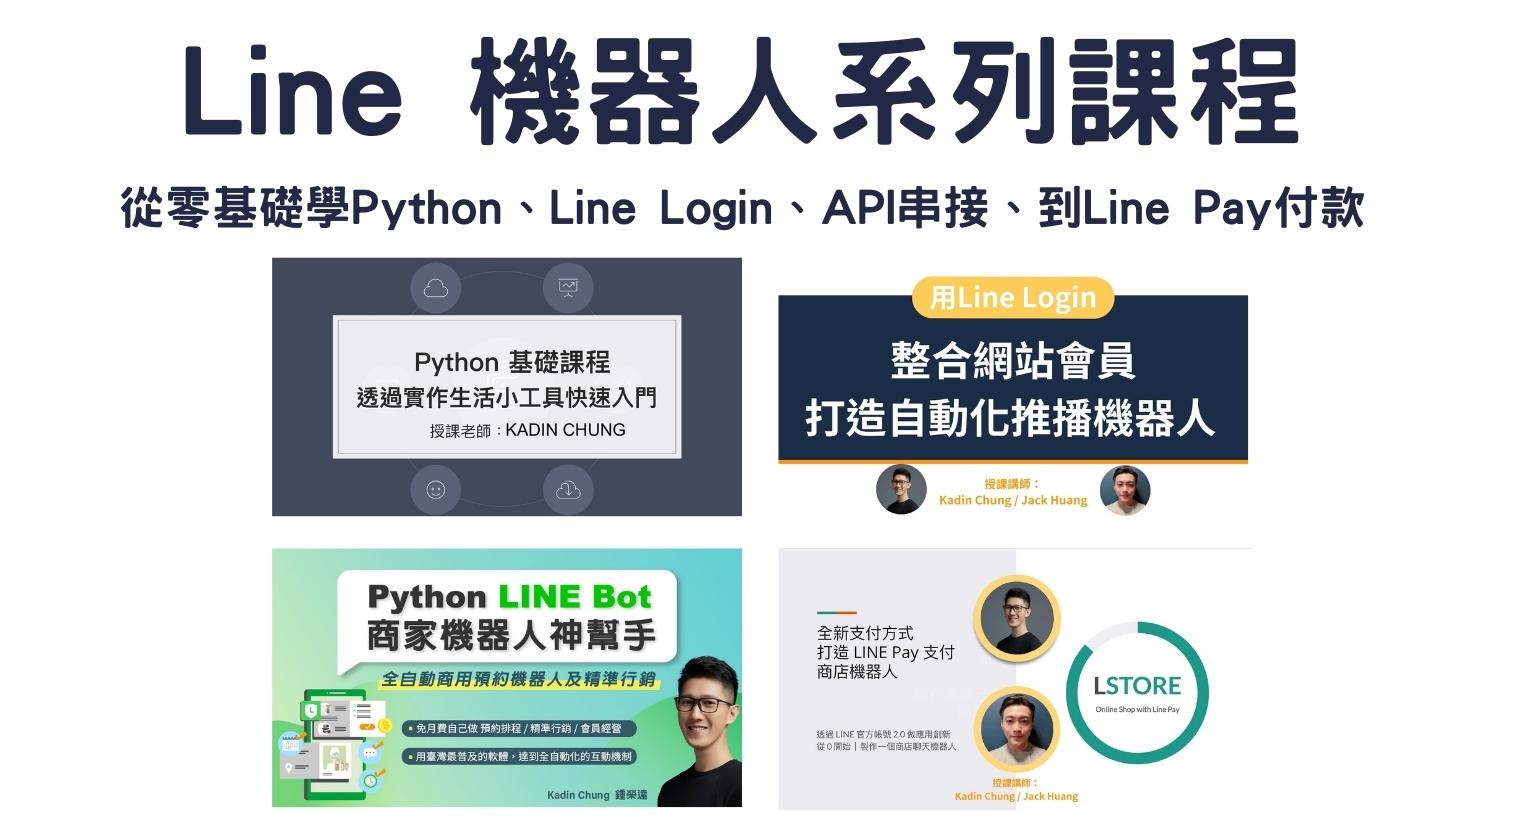 LINE 機器人系列課程：從零基礎學Python、LINE Login、API串接、到LINE Pay付款（Kadin老師）